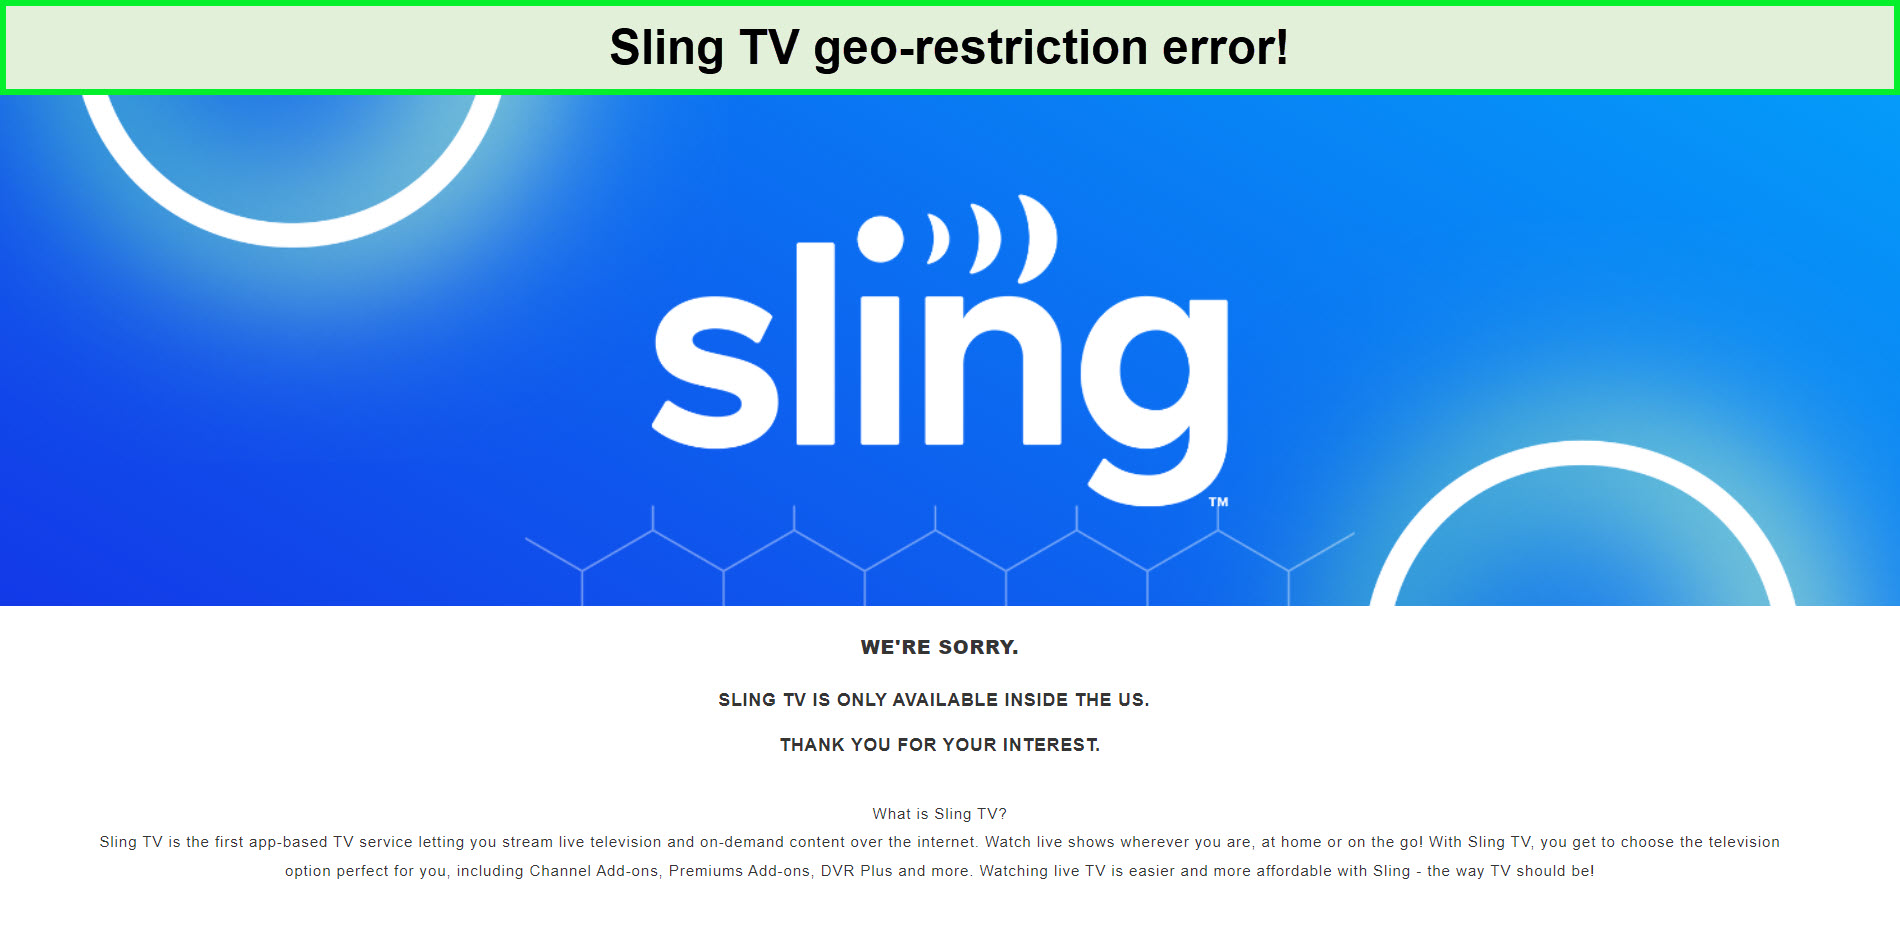 sling-geo-restriction-error-in-spain